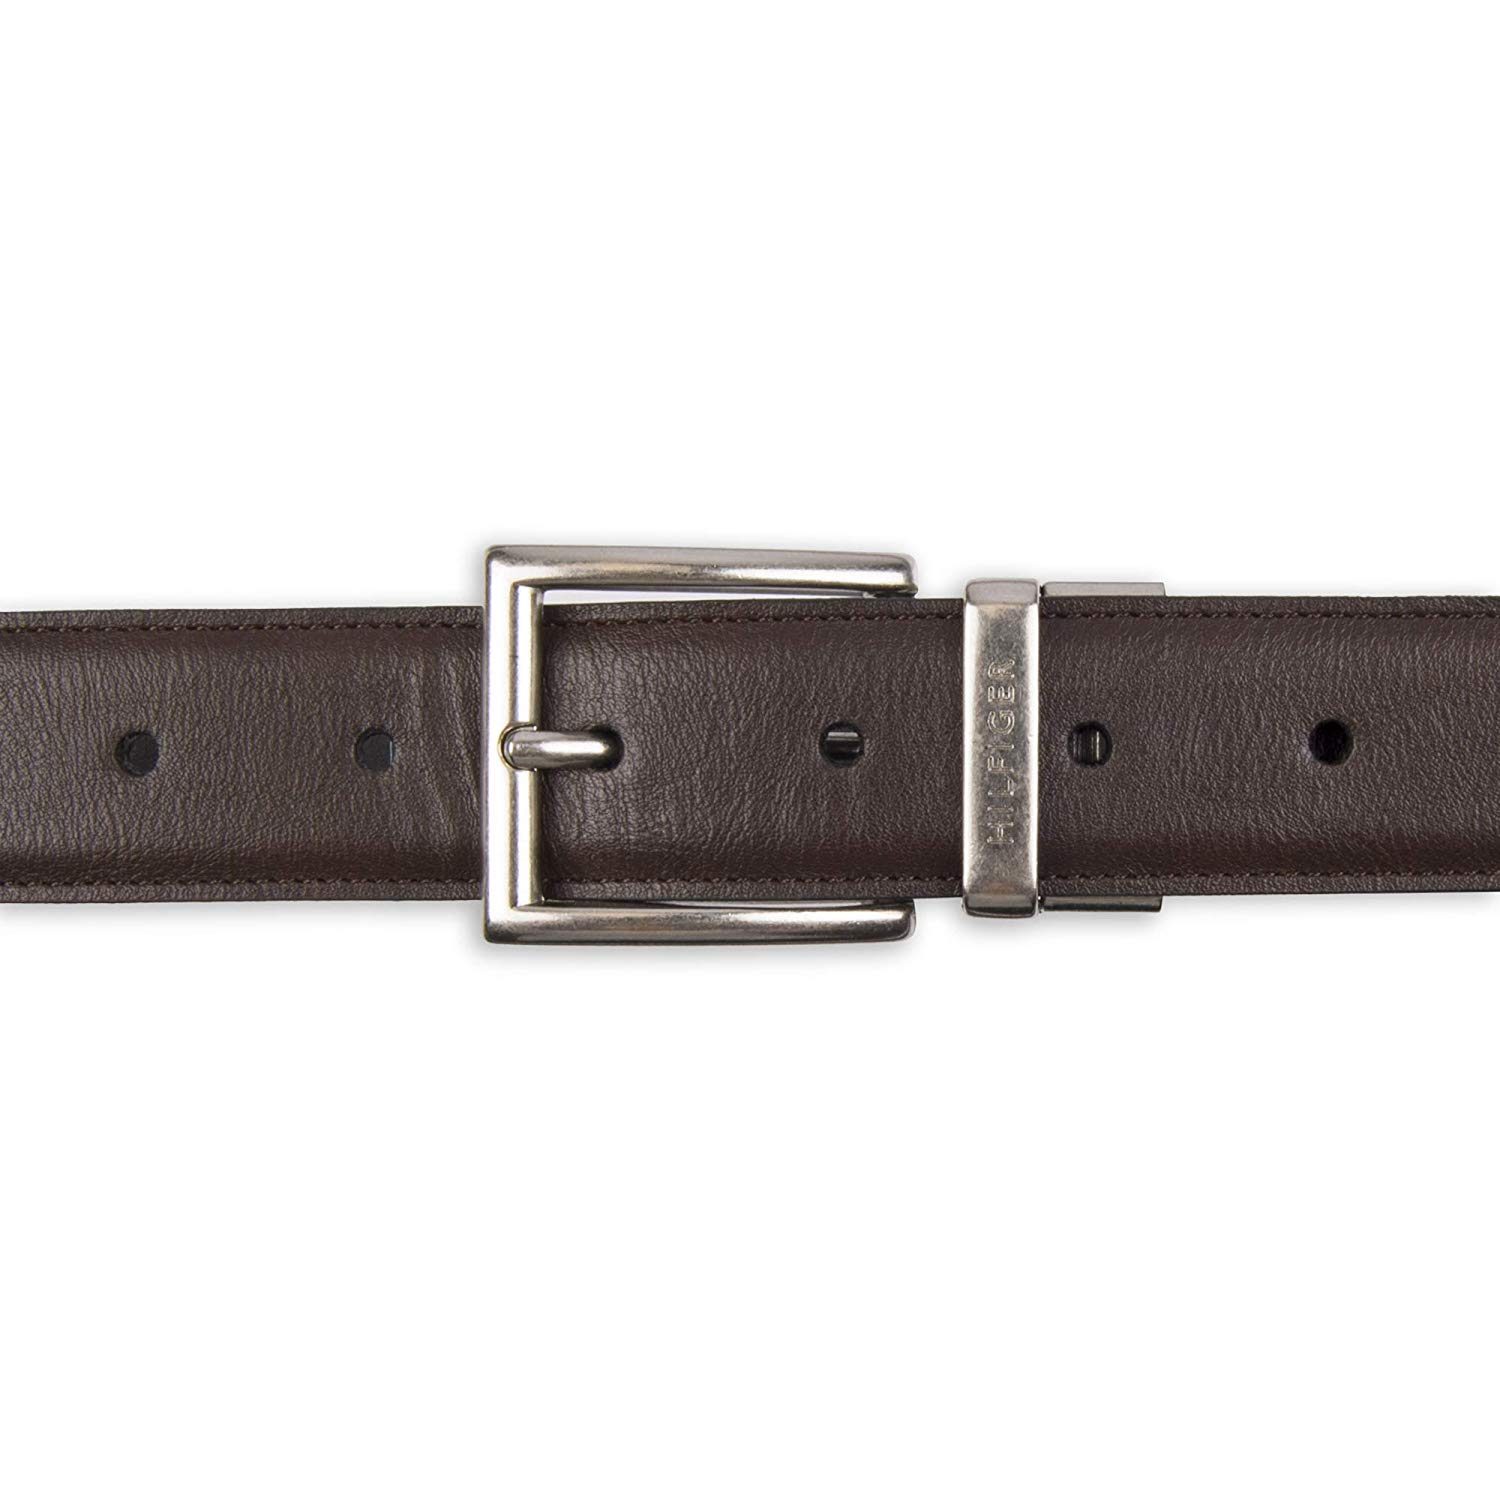 Tommy Hilfiger Reversible Leather Belt - Casual for Mens, Brown/Black, Size 48 D | eBay